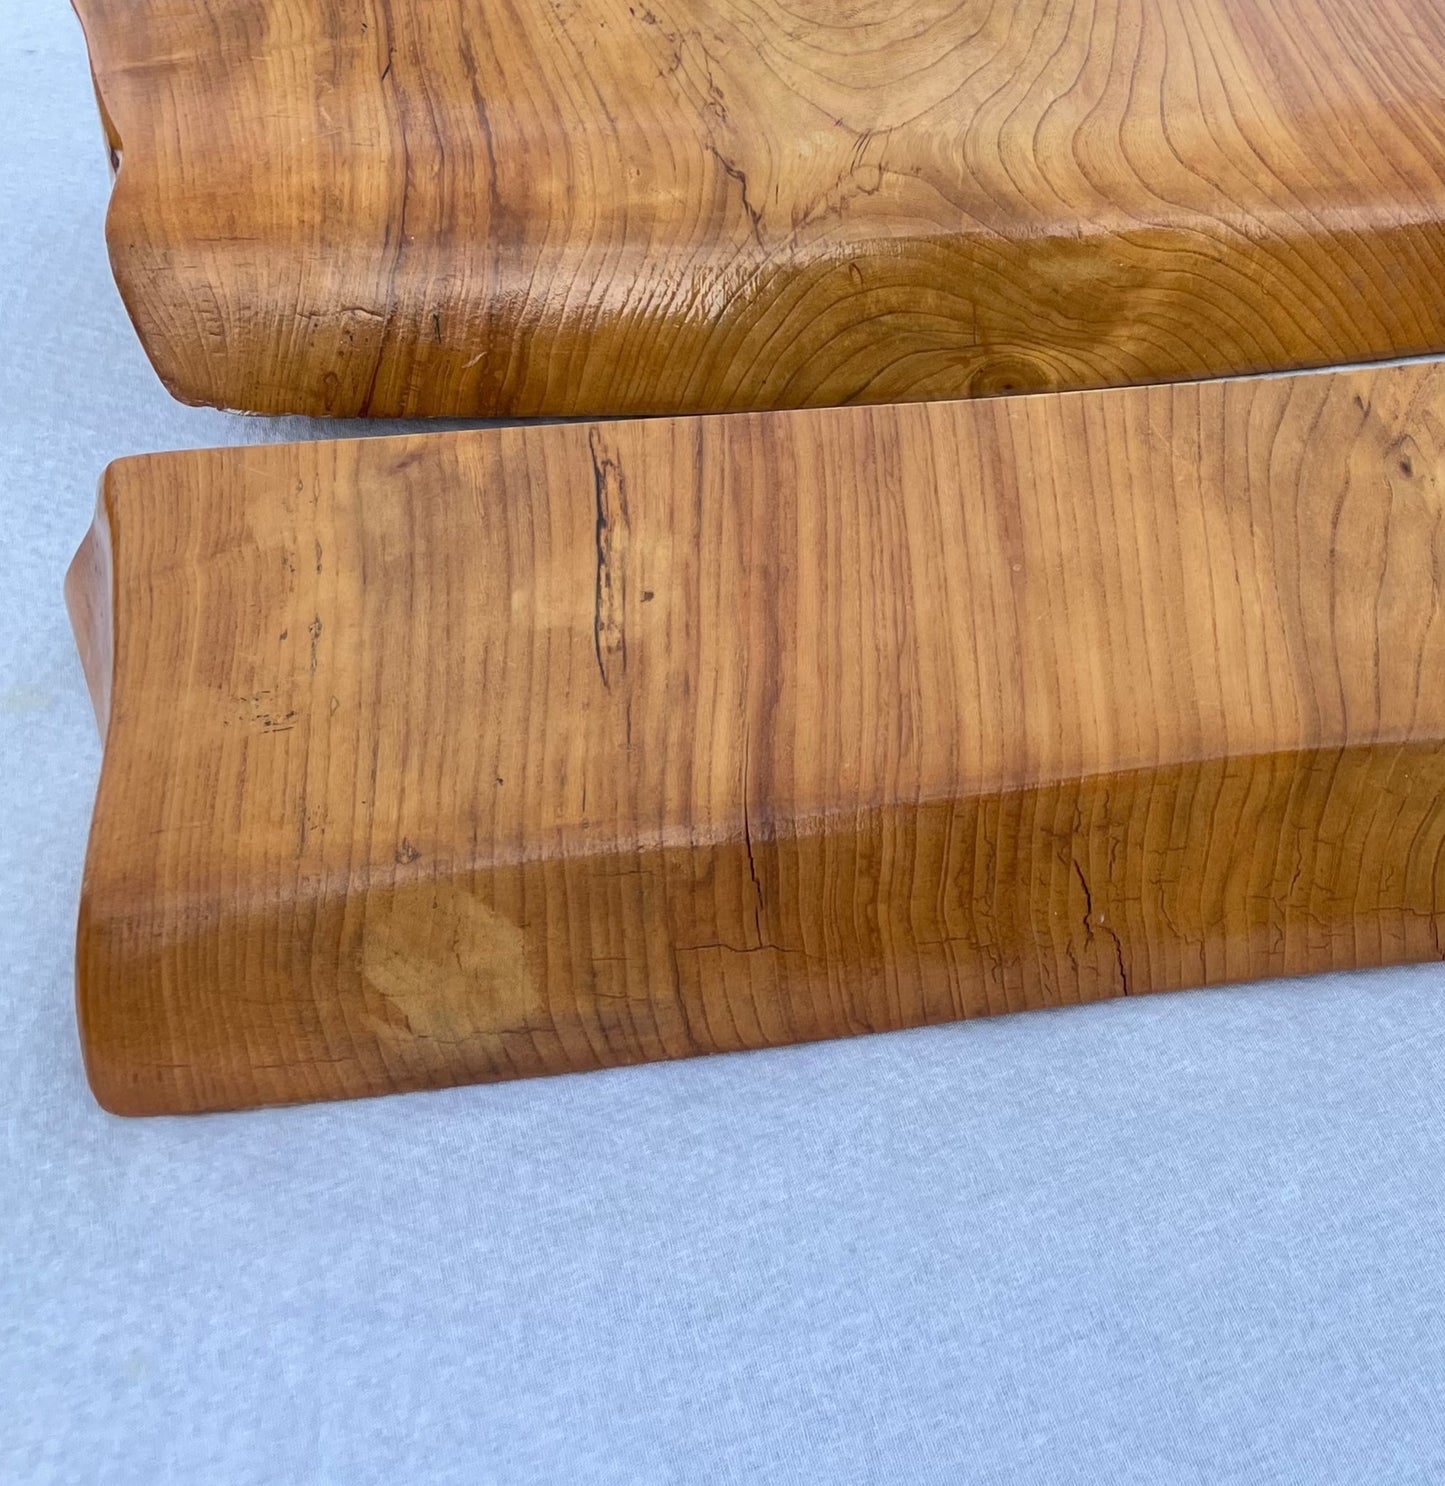 Myrtlewood Hardwood Shelf Slabs